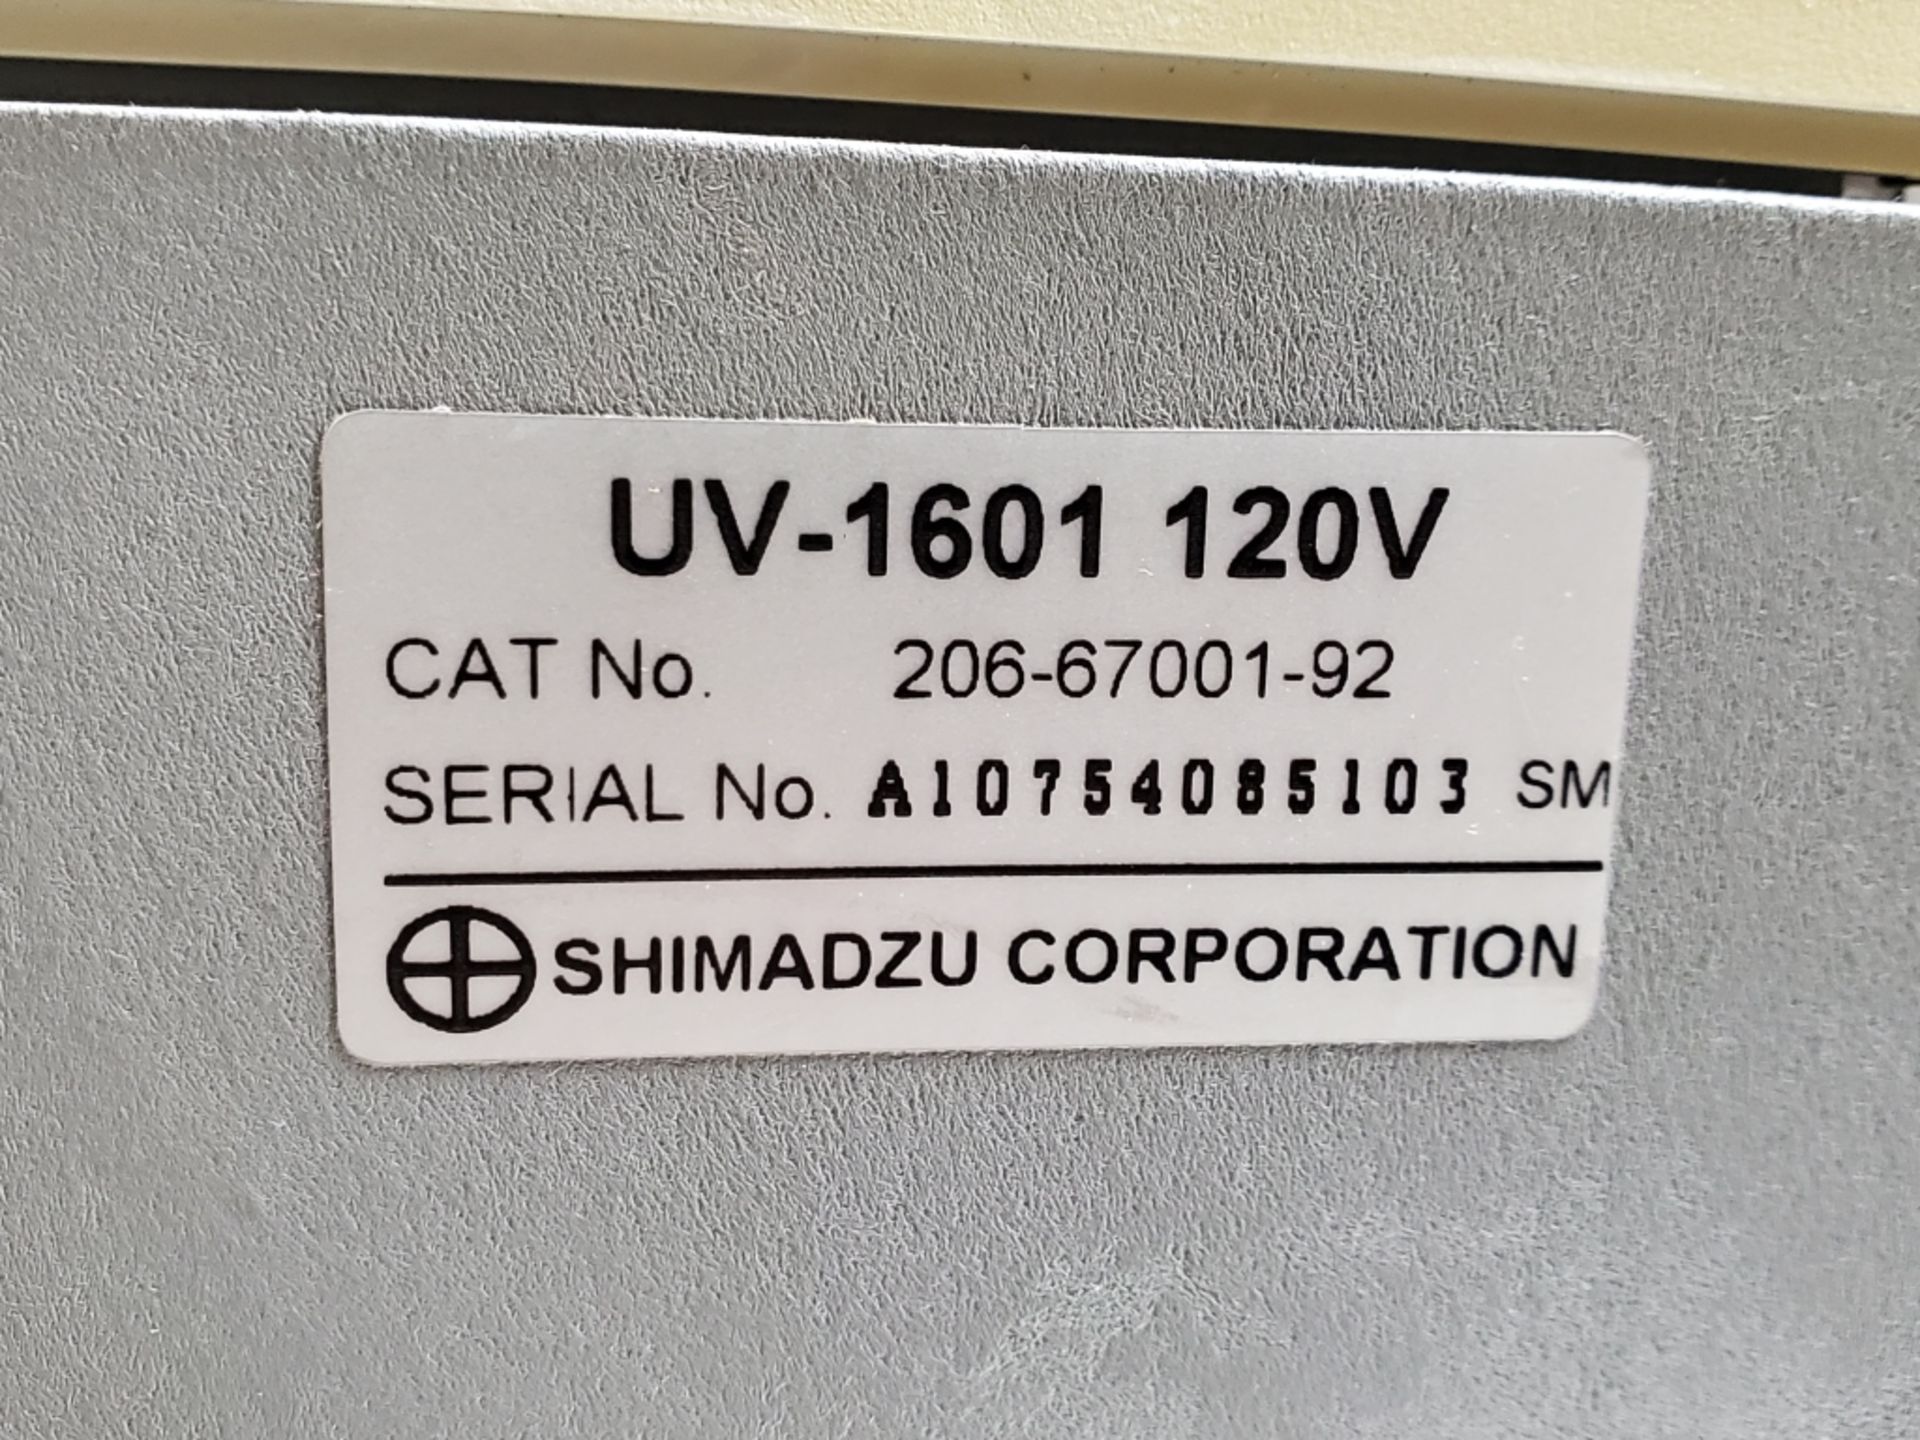 Shimadzu Mdl UV-1601 UV-Visible Spectrophotometer - Image 5 of 5